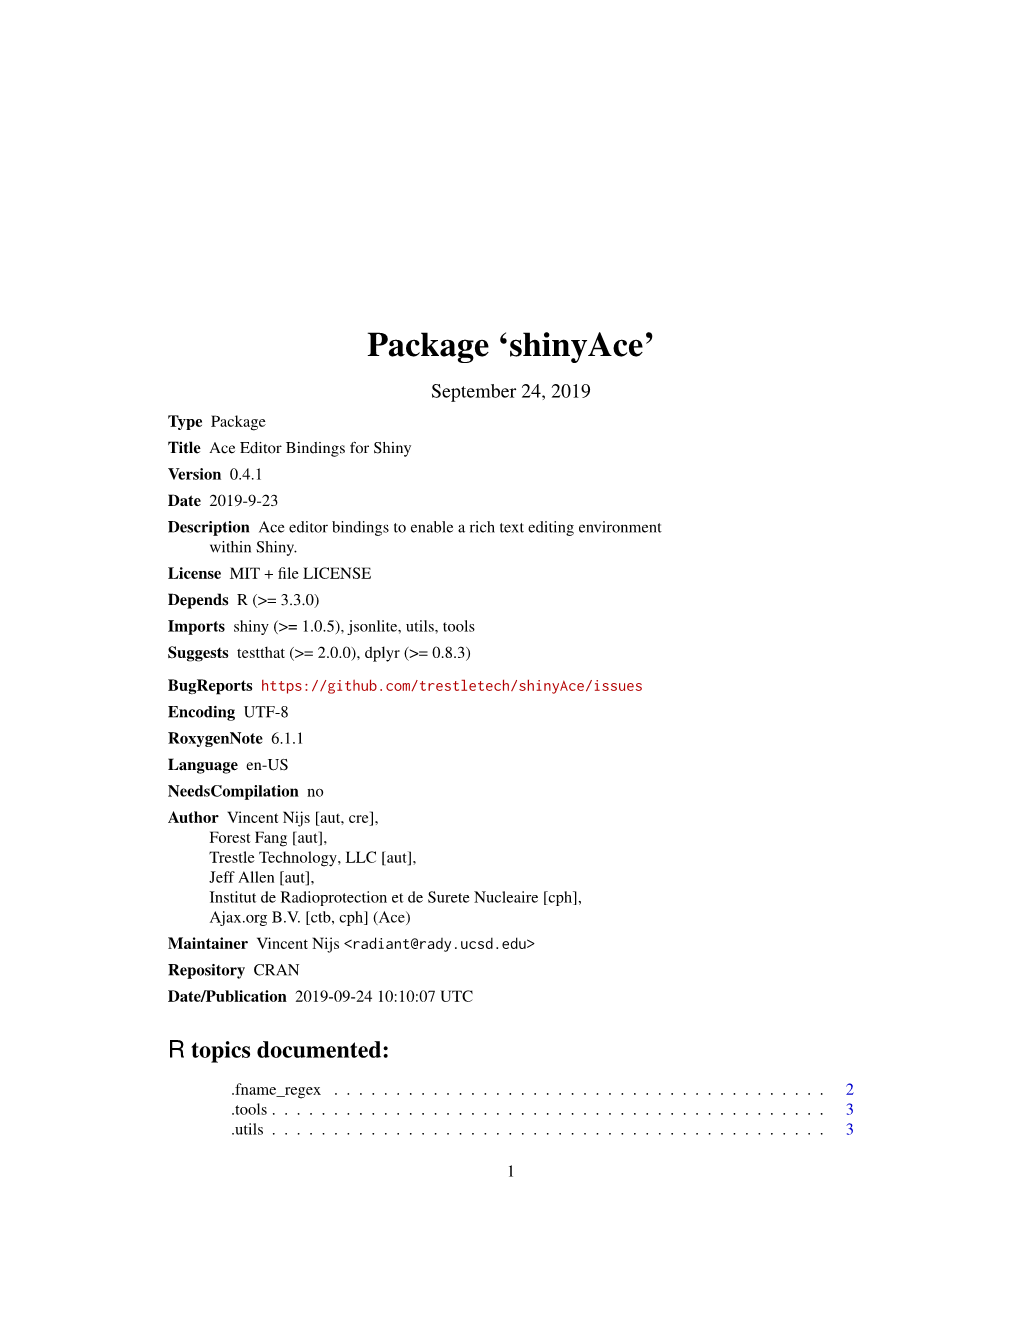 Package 'Shinyace'